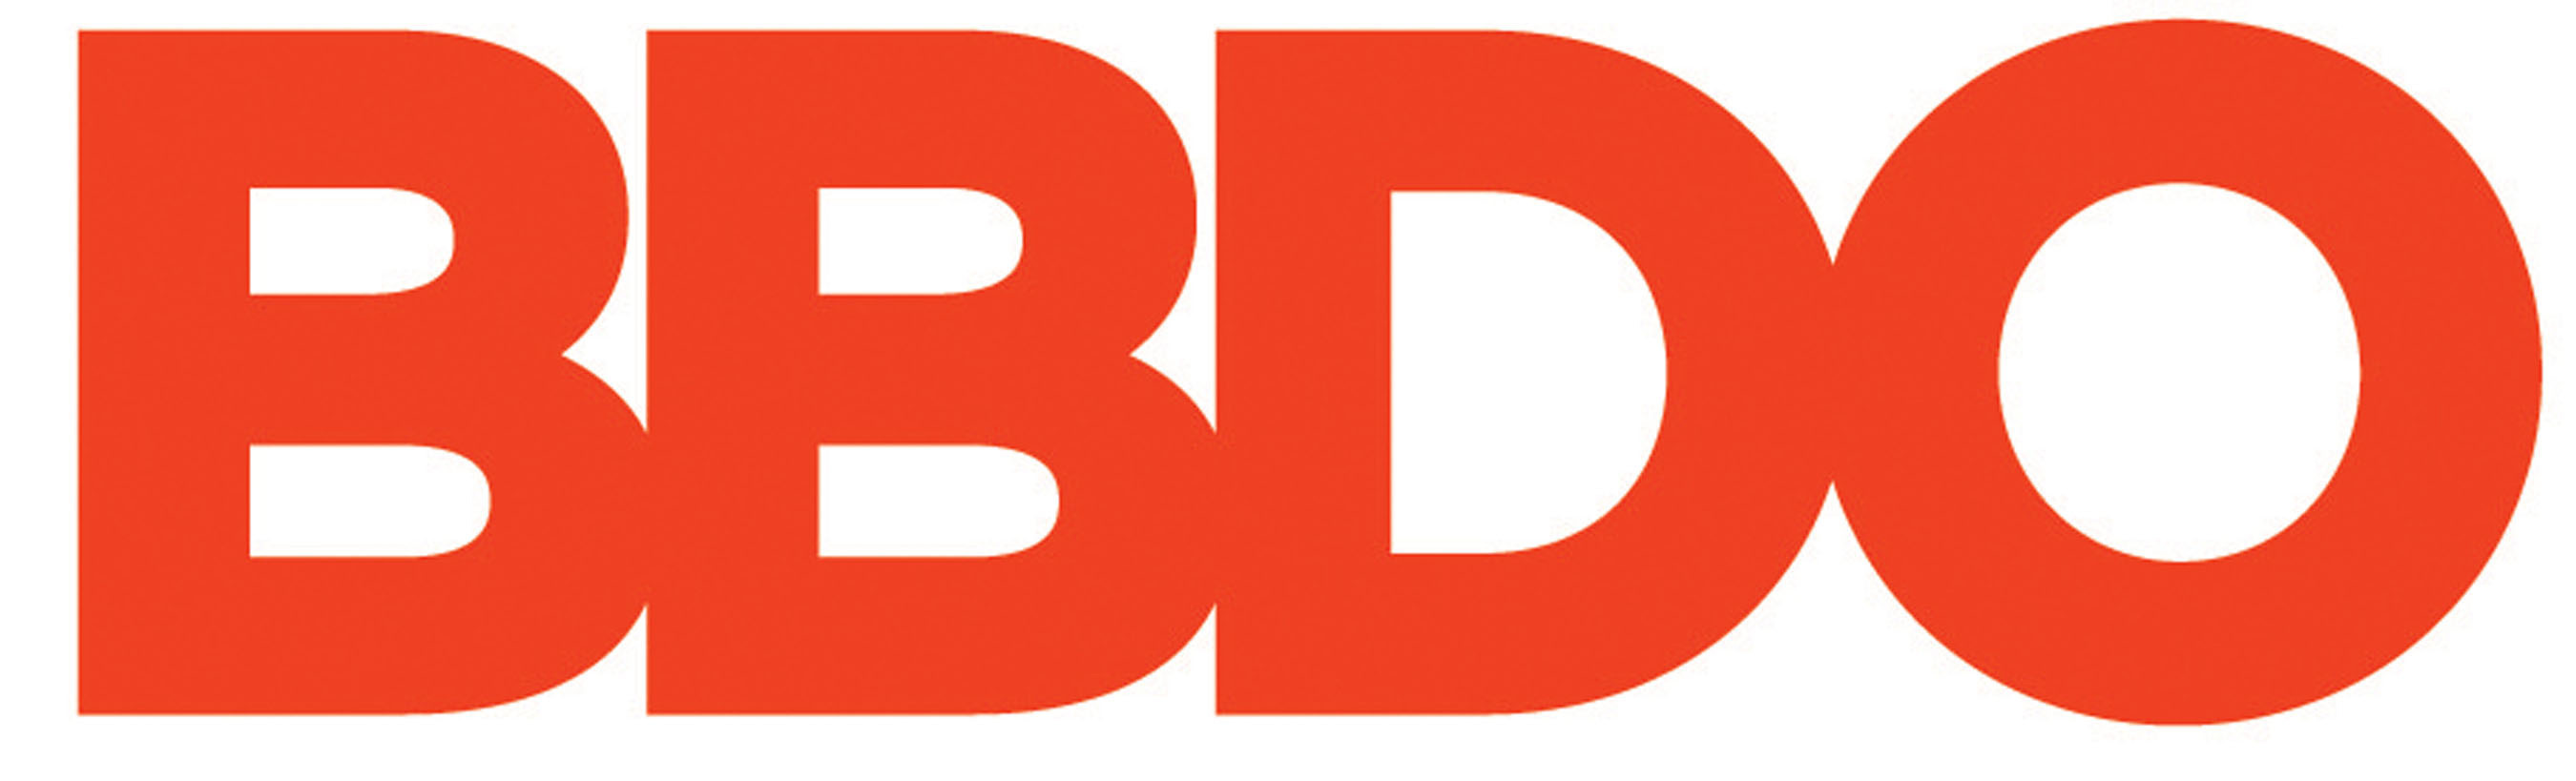 BBDO Worldwide logo.